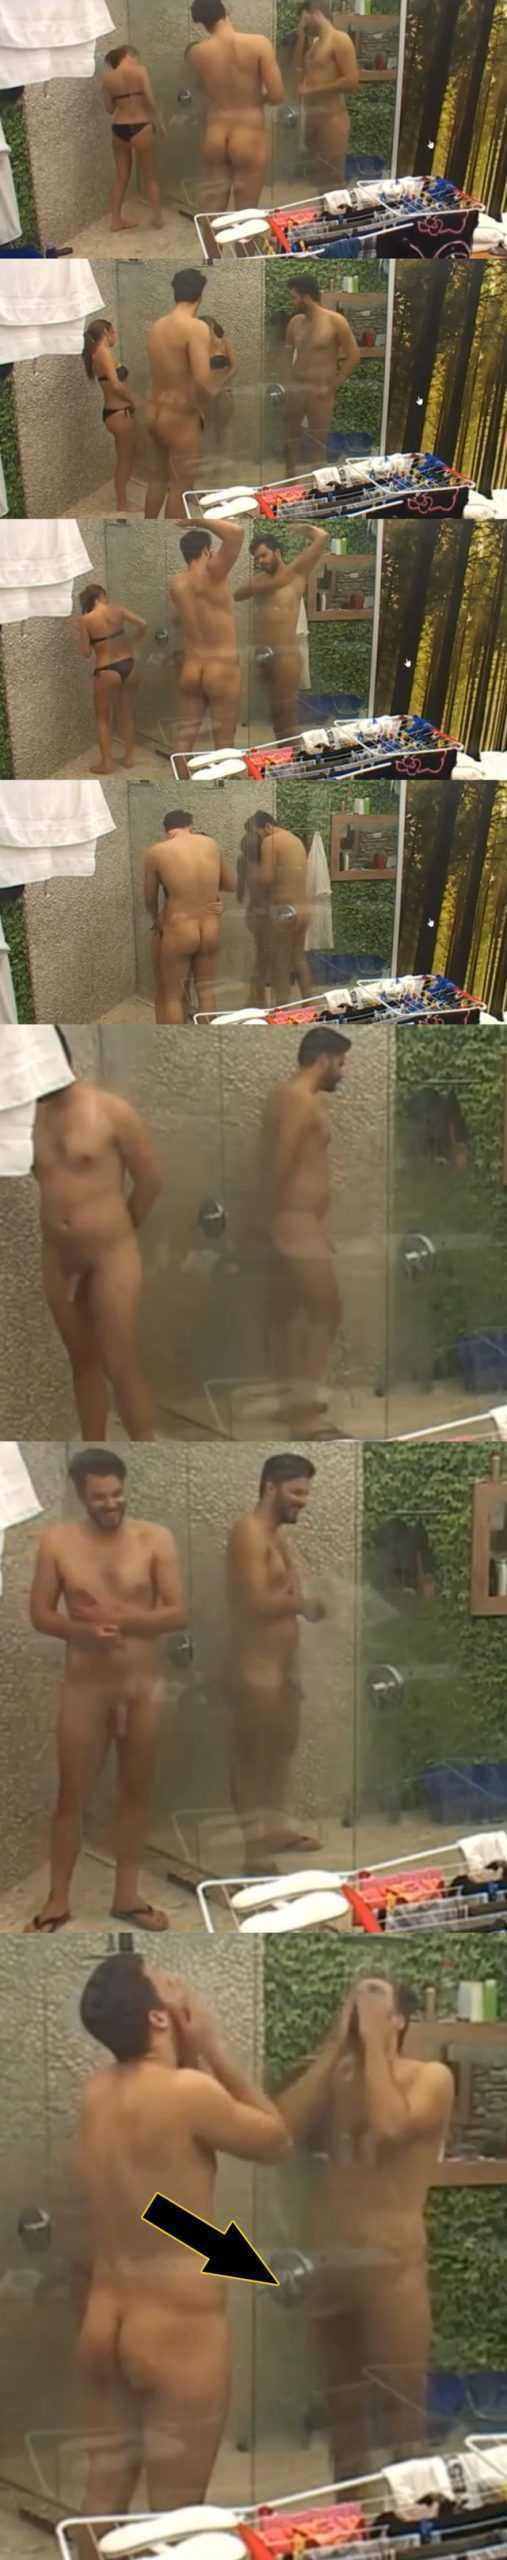 guy getting boner in shower big brother Serbia